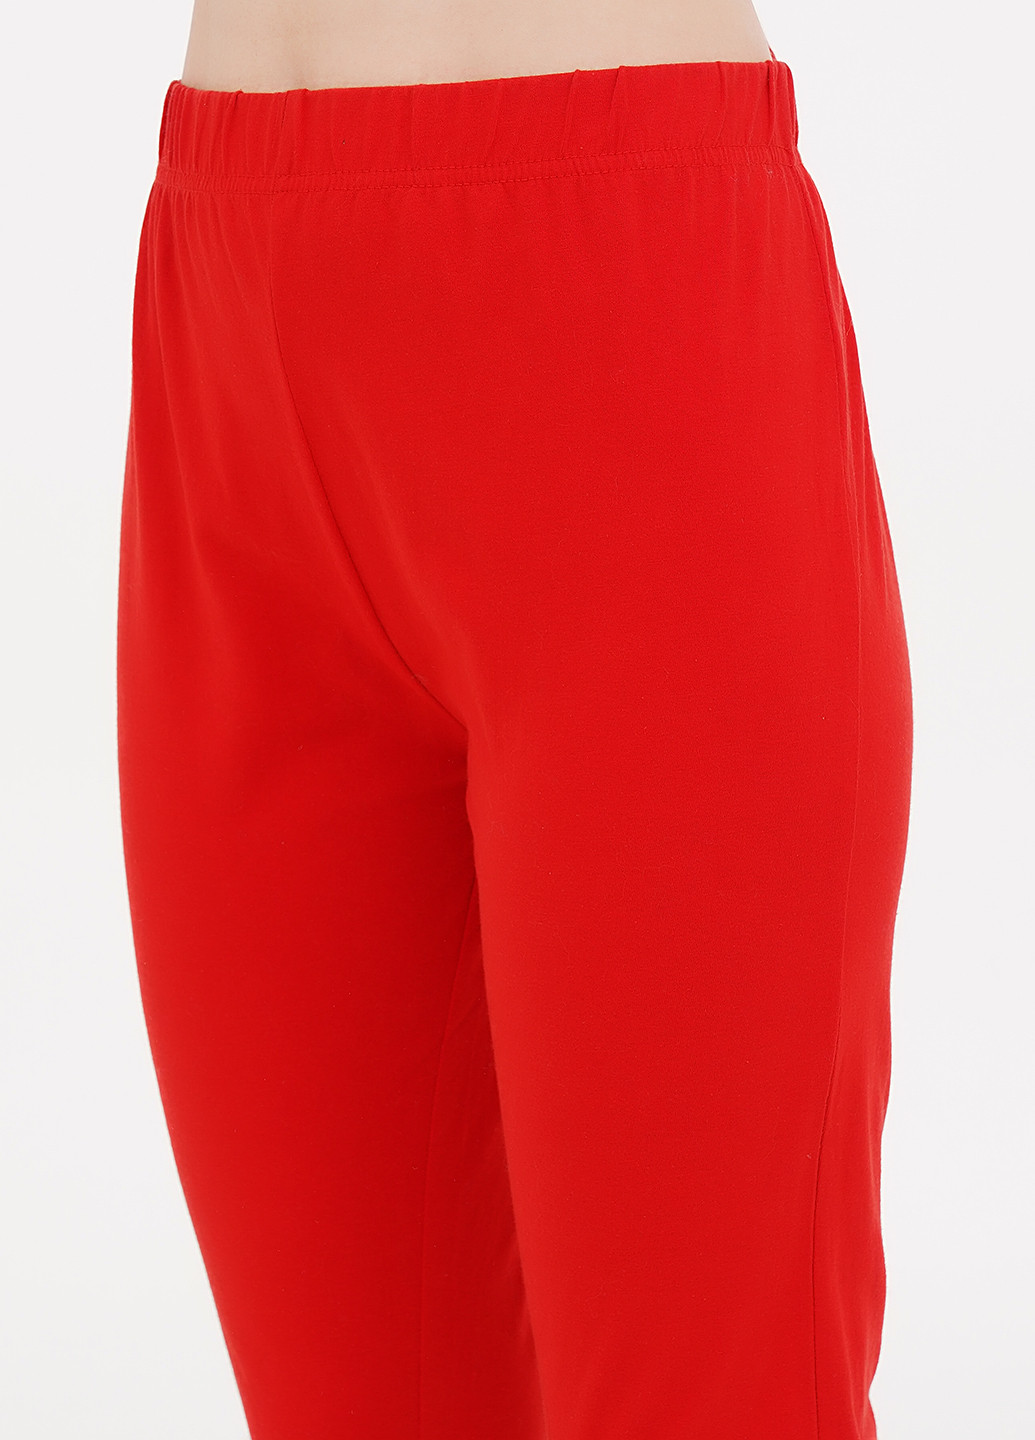 Красная всесезон пижама (лонгслив, брюки) лонгслив + брюки Cleve